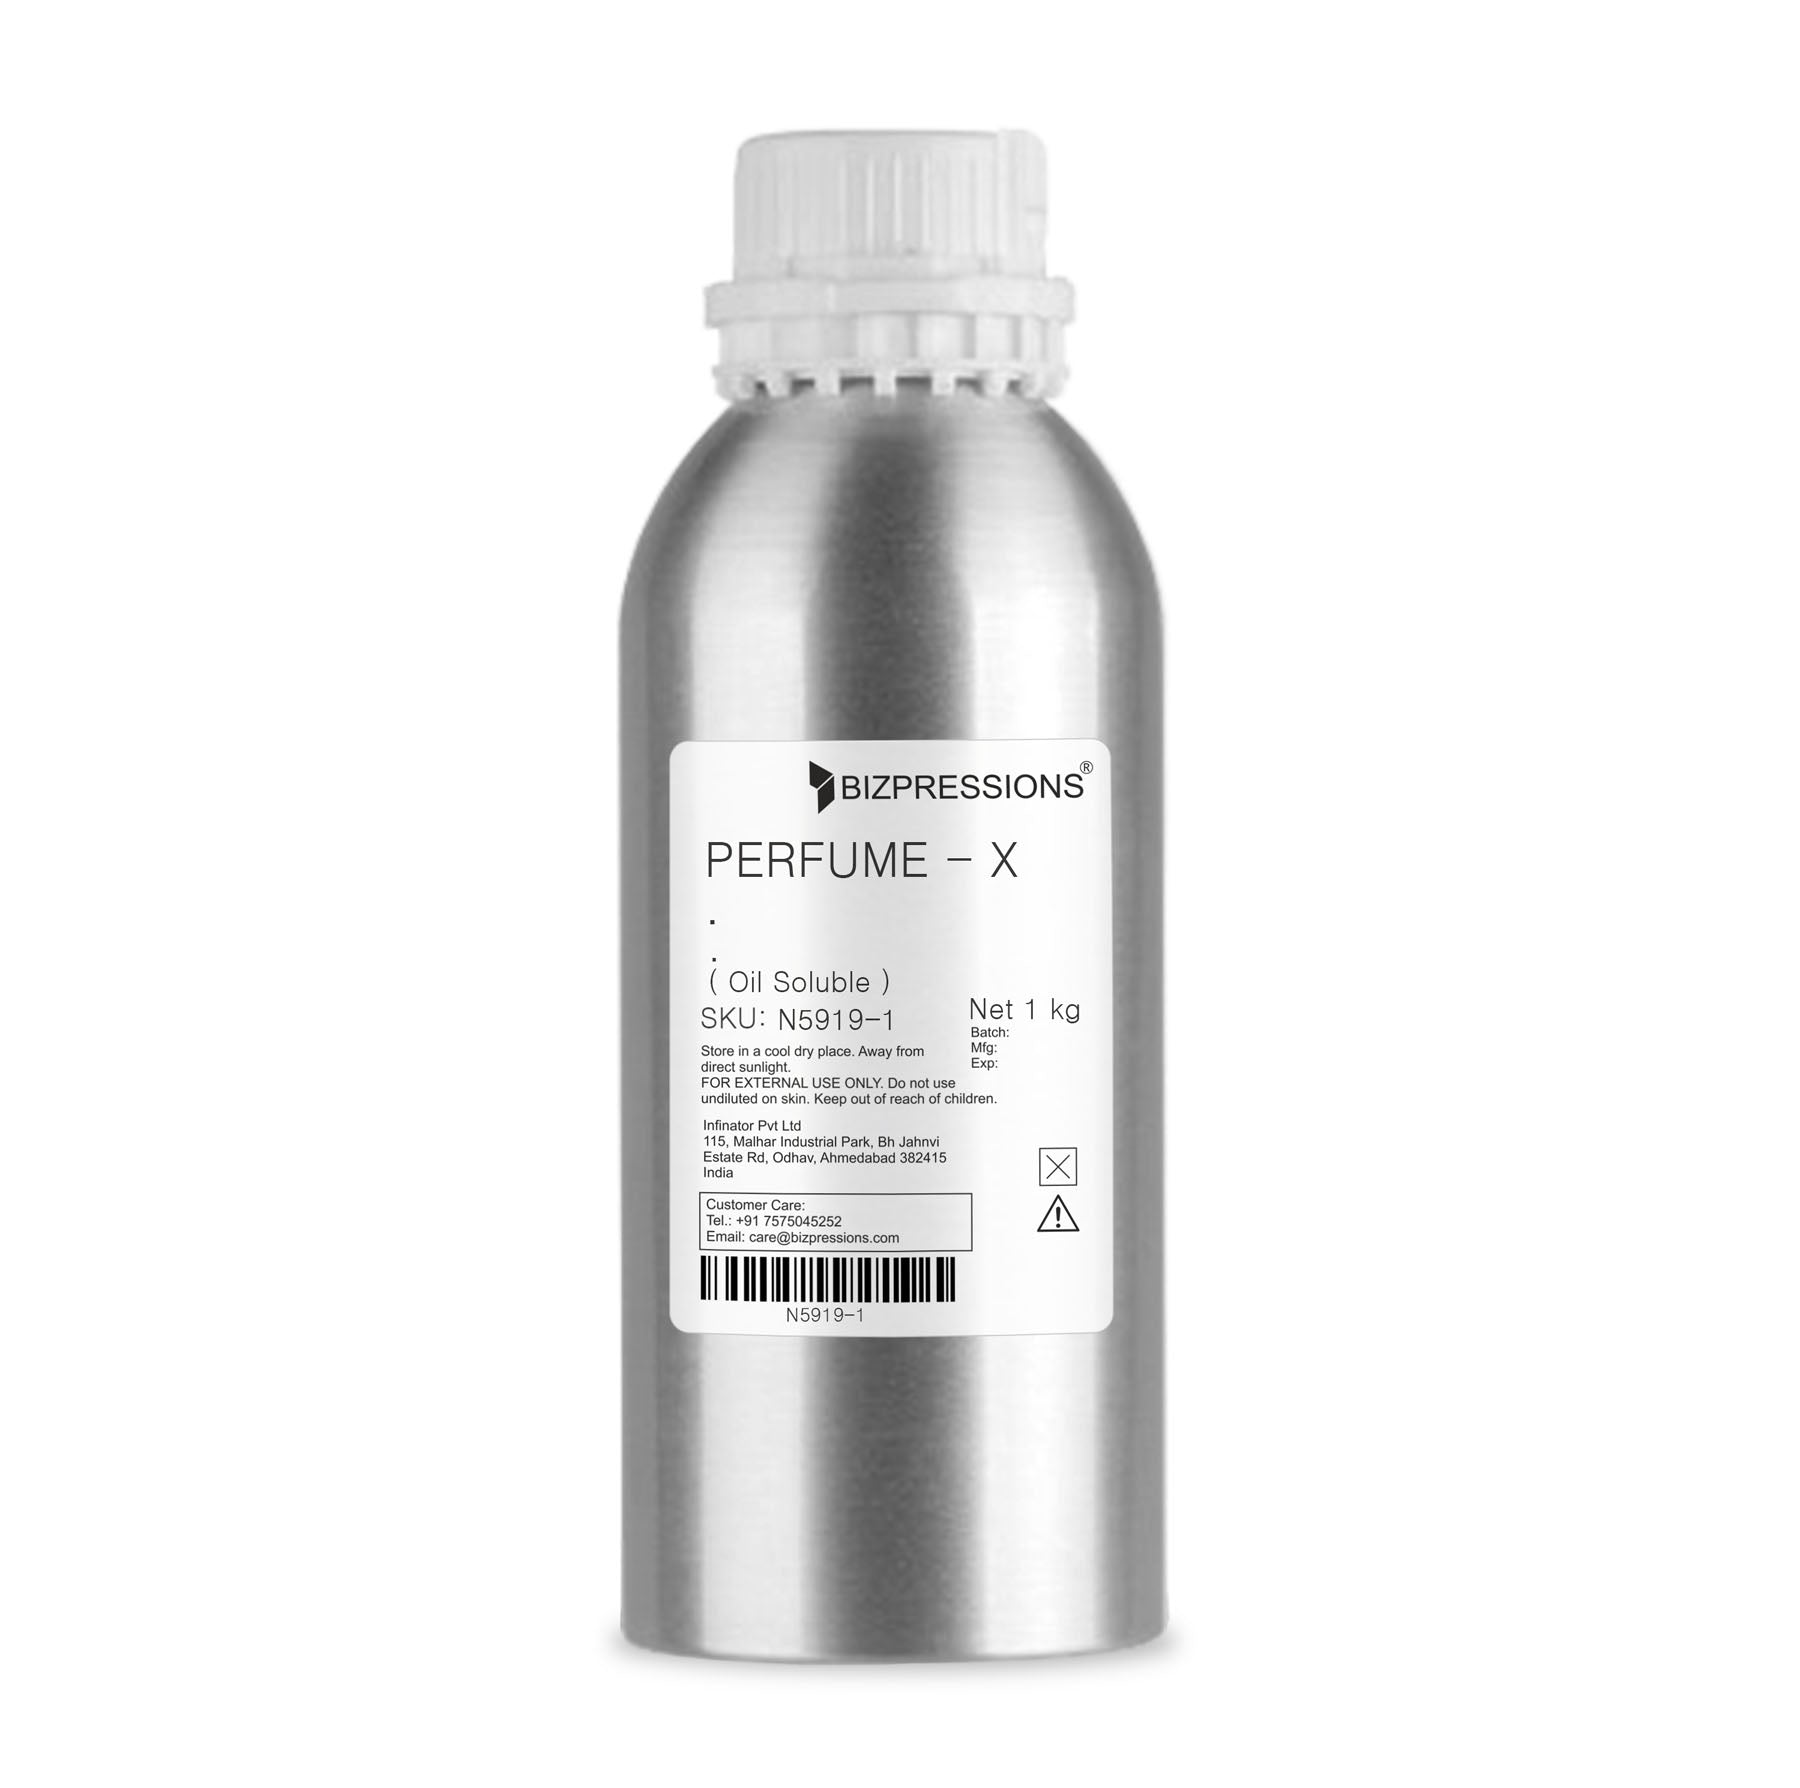 PERFUME - X - Fragrance ( Oil Soluble ) - 1 kg